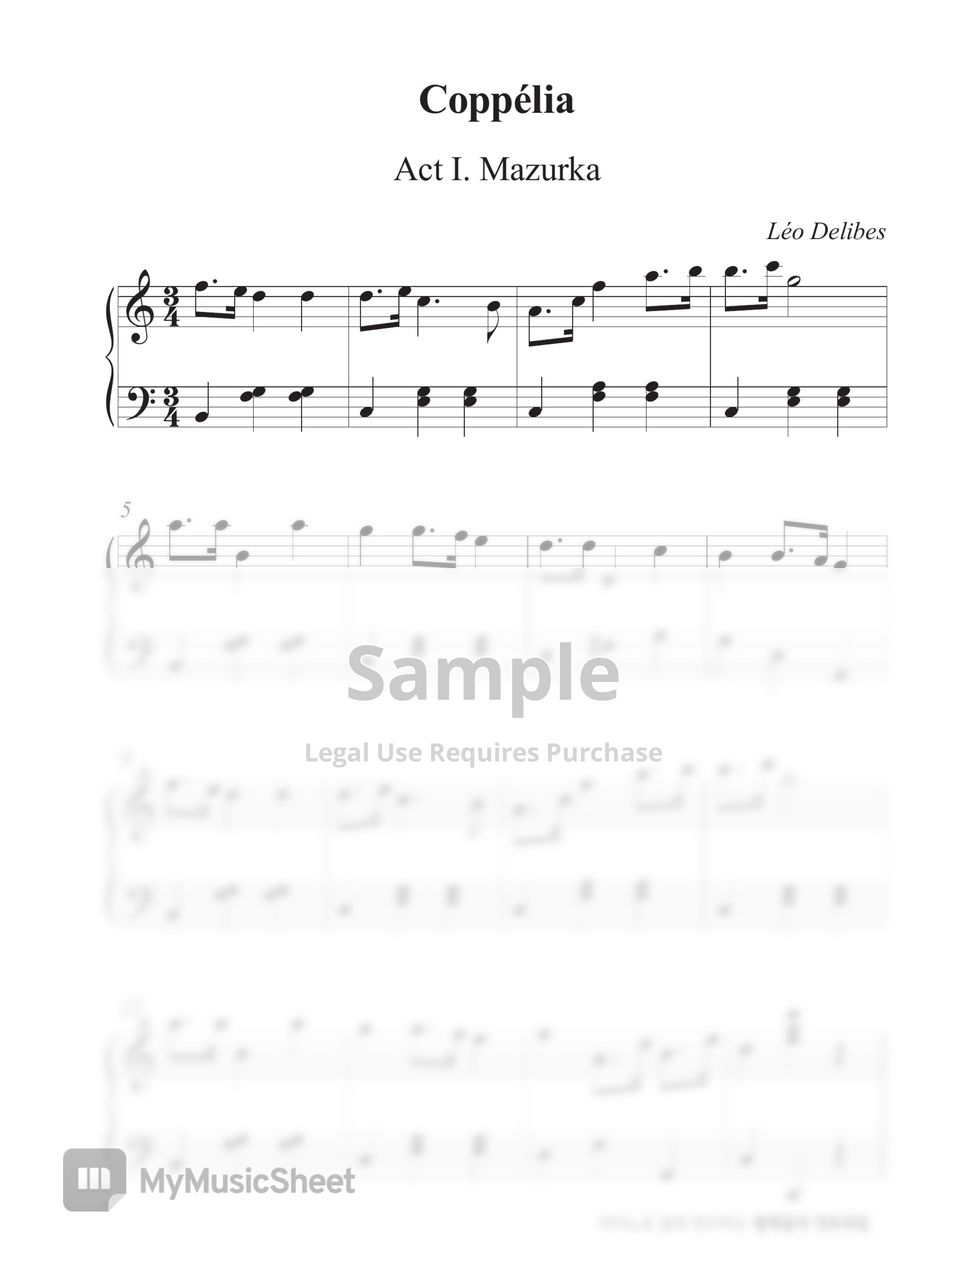 Leo Delibes - 2. Coppelia Mazurka (ballet music